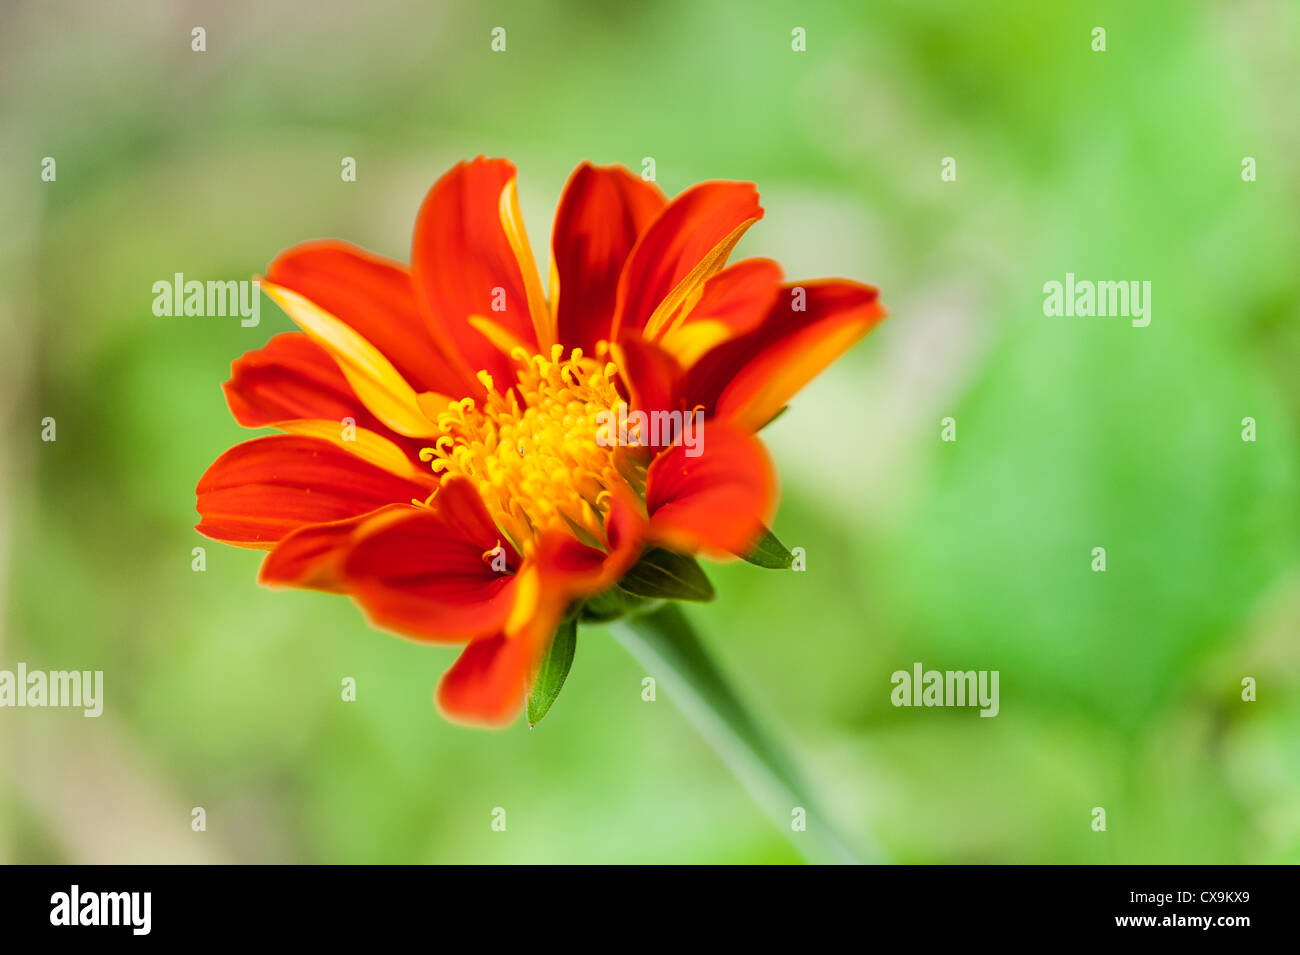 Red flower unfocus on blur green background Stock Photo